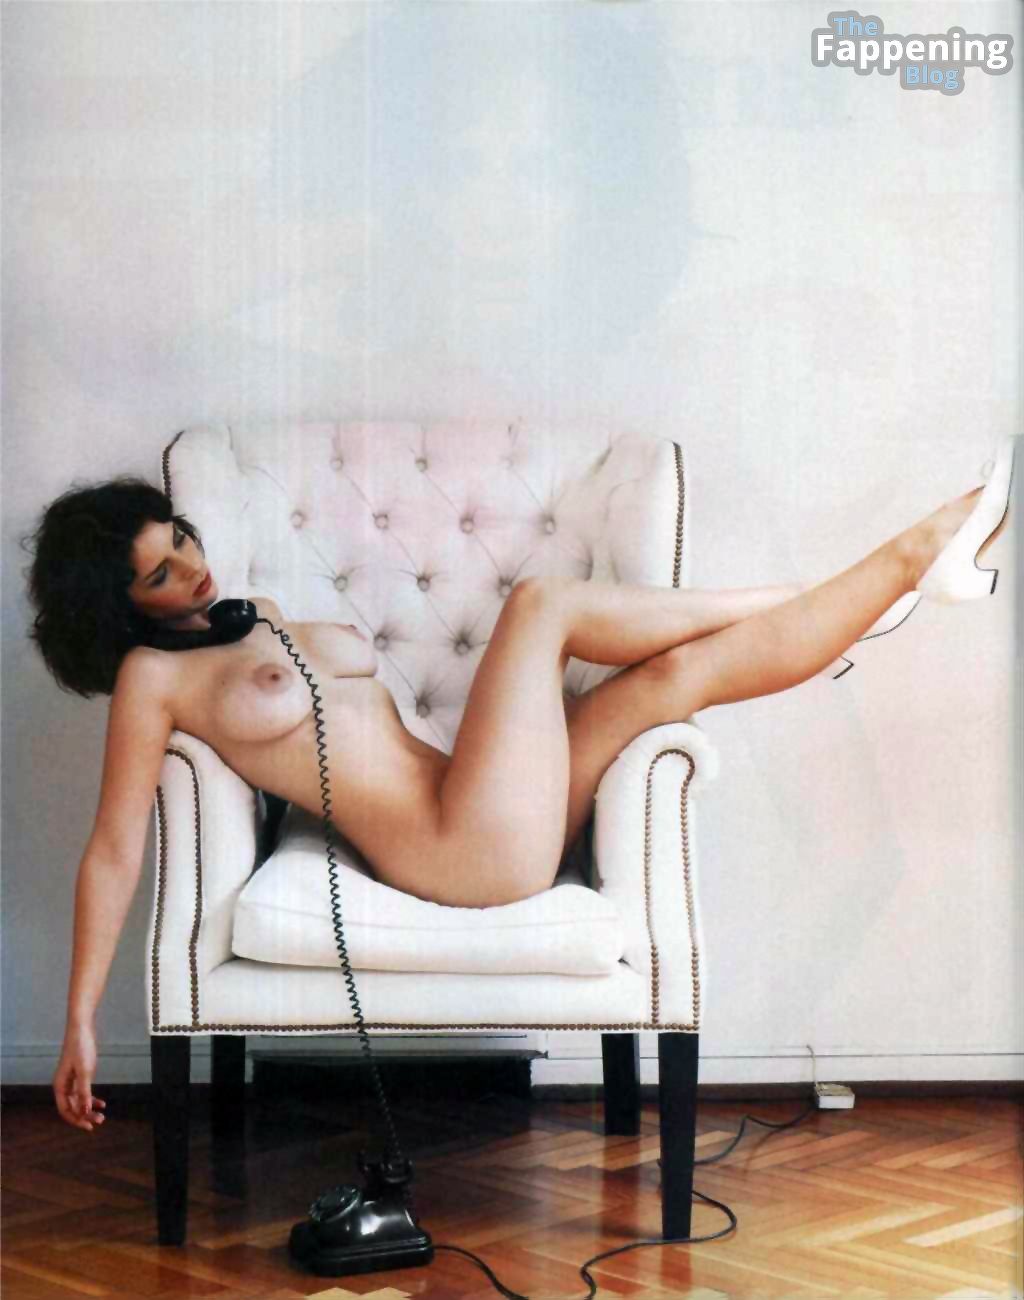 Romina-Ricci-Nude-Sexy-The-Fappening-Blog-9.jpg